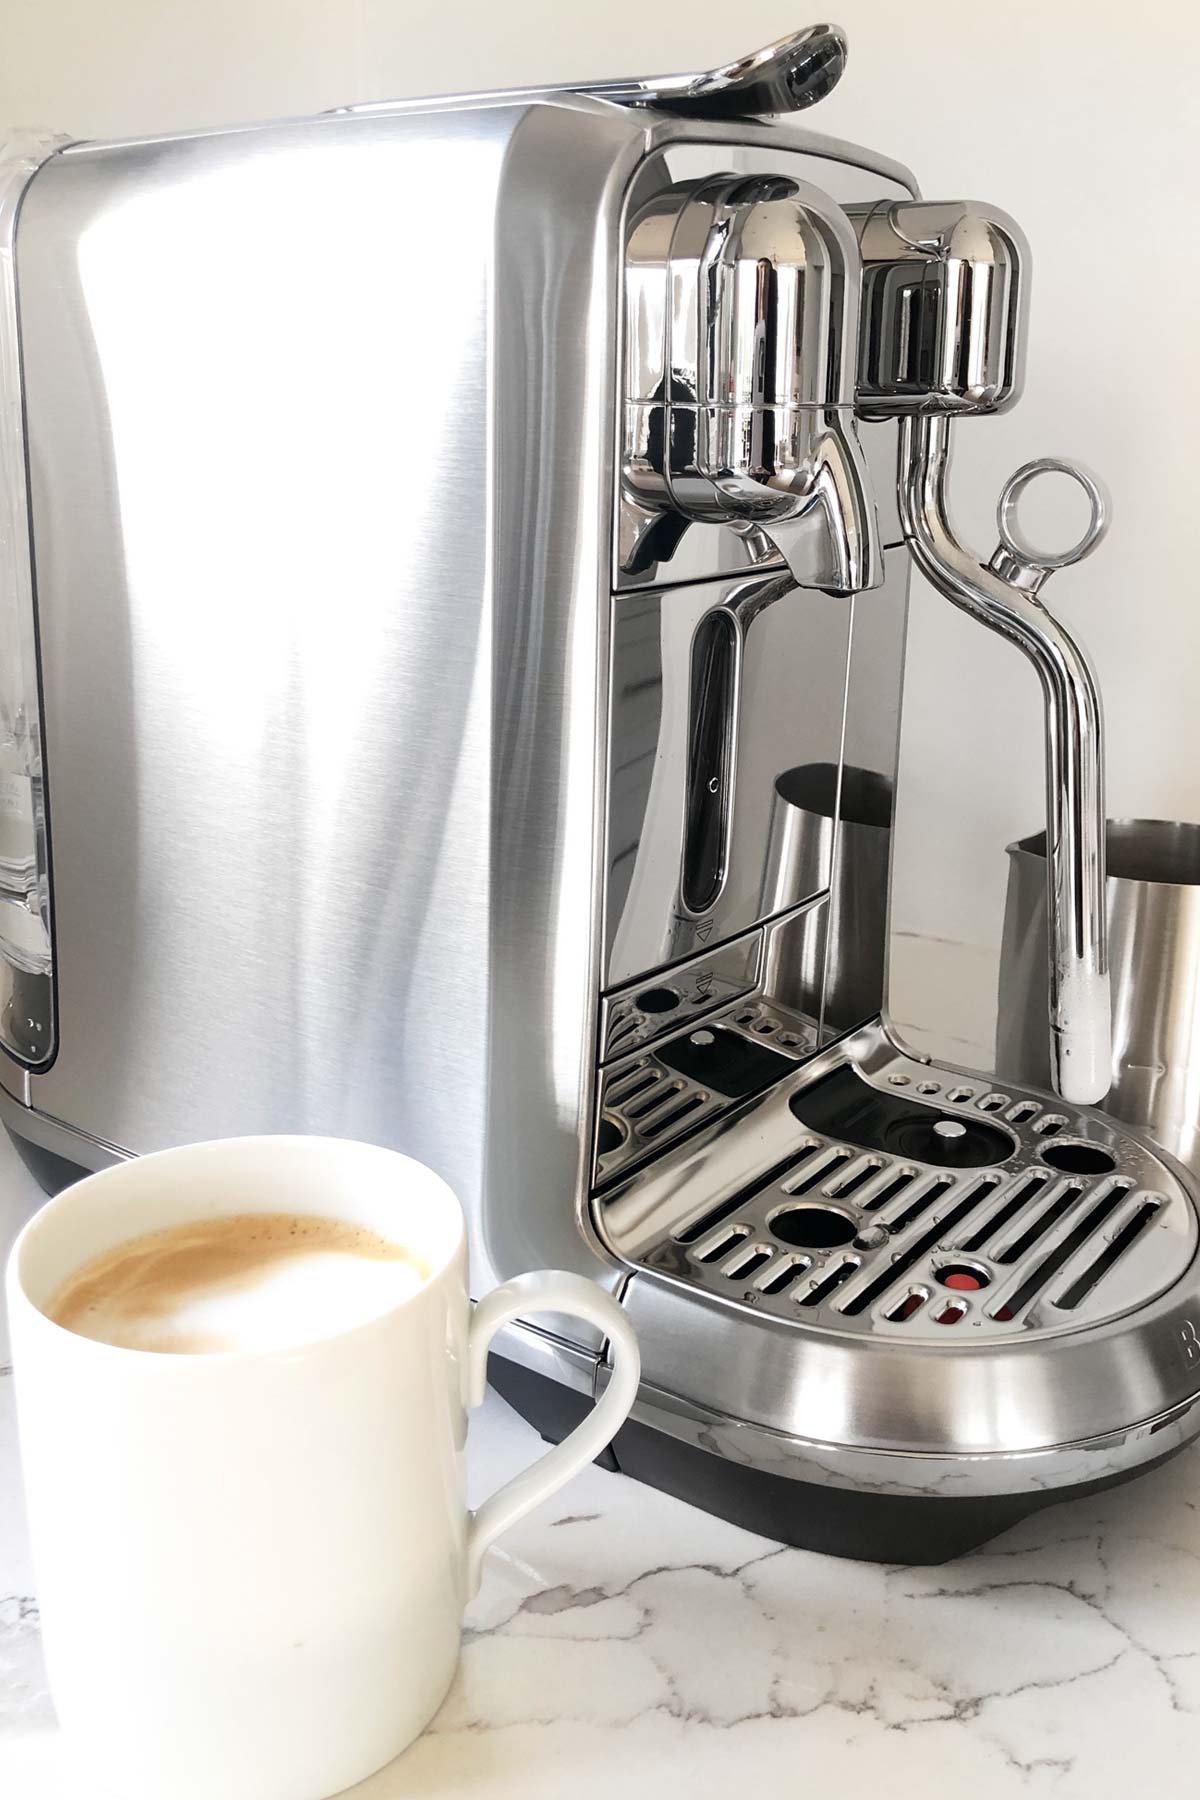 Nespresso Creatista Plus machine with finished hot latte in a mug.